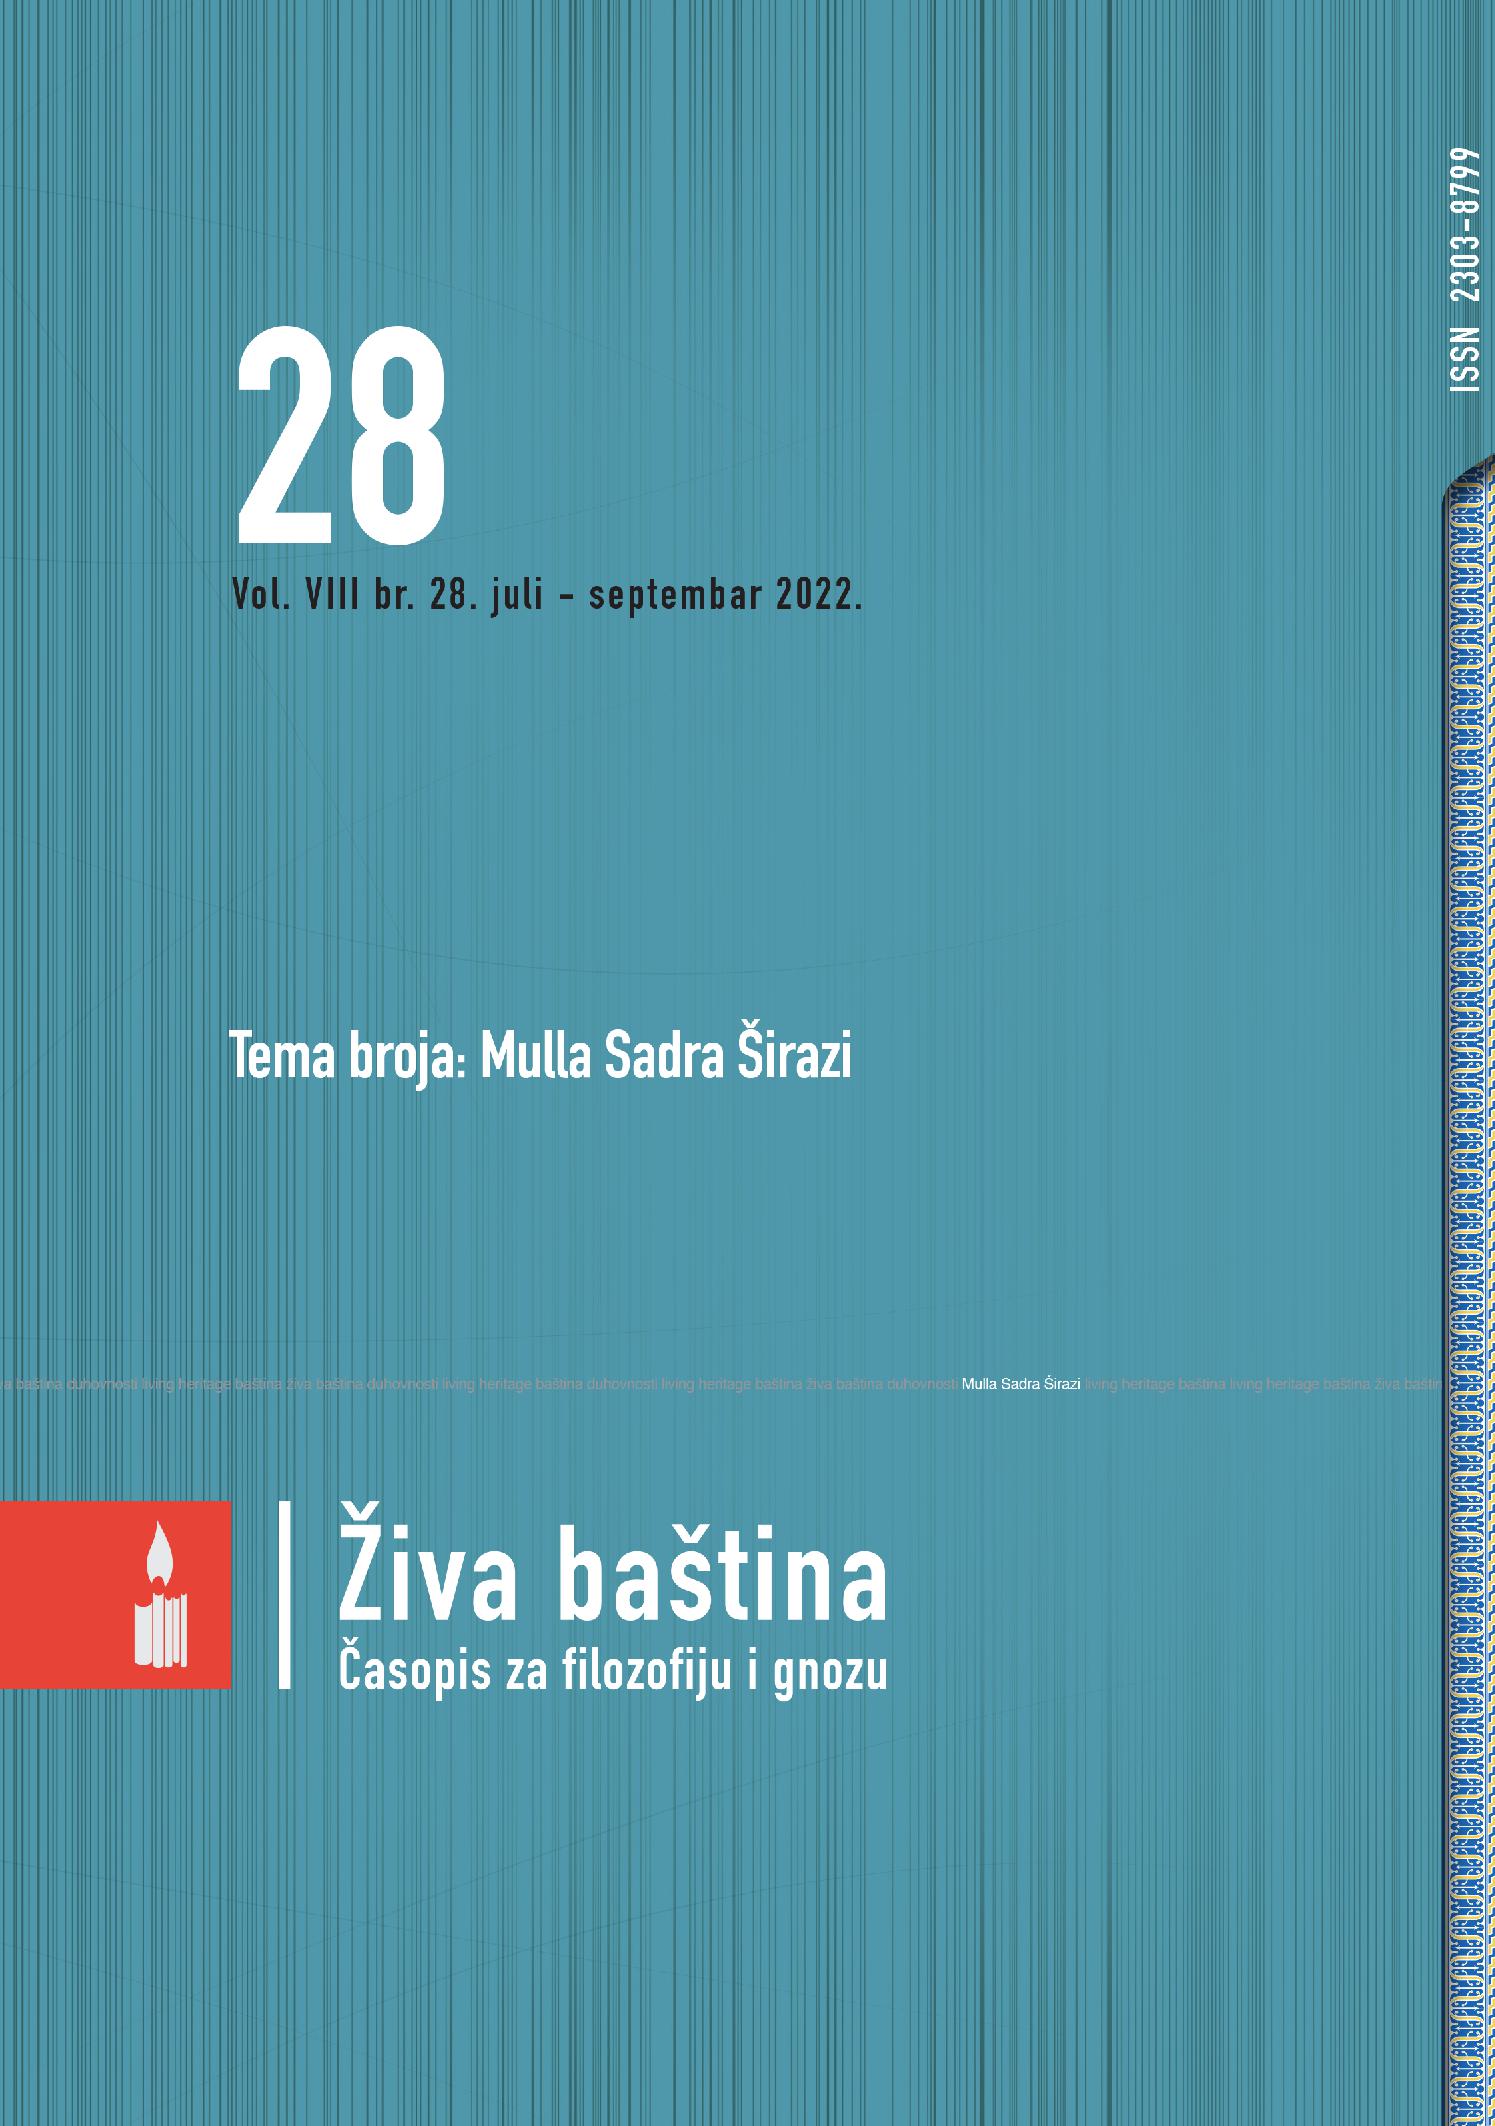 Mullā Sadrā and about Mullā Sadra (His Works and Ideas) in Bosnian, Croatian and Serbian Cover Image